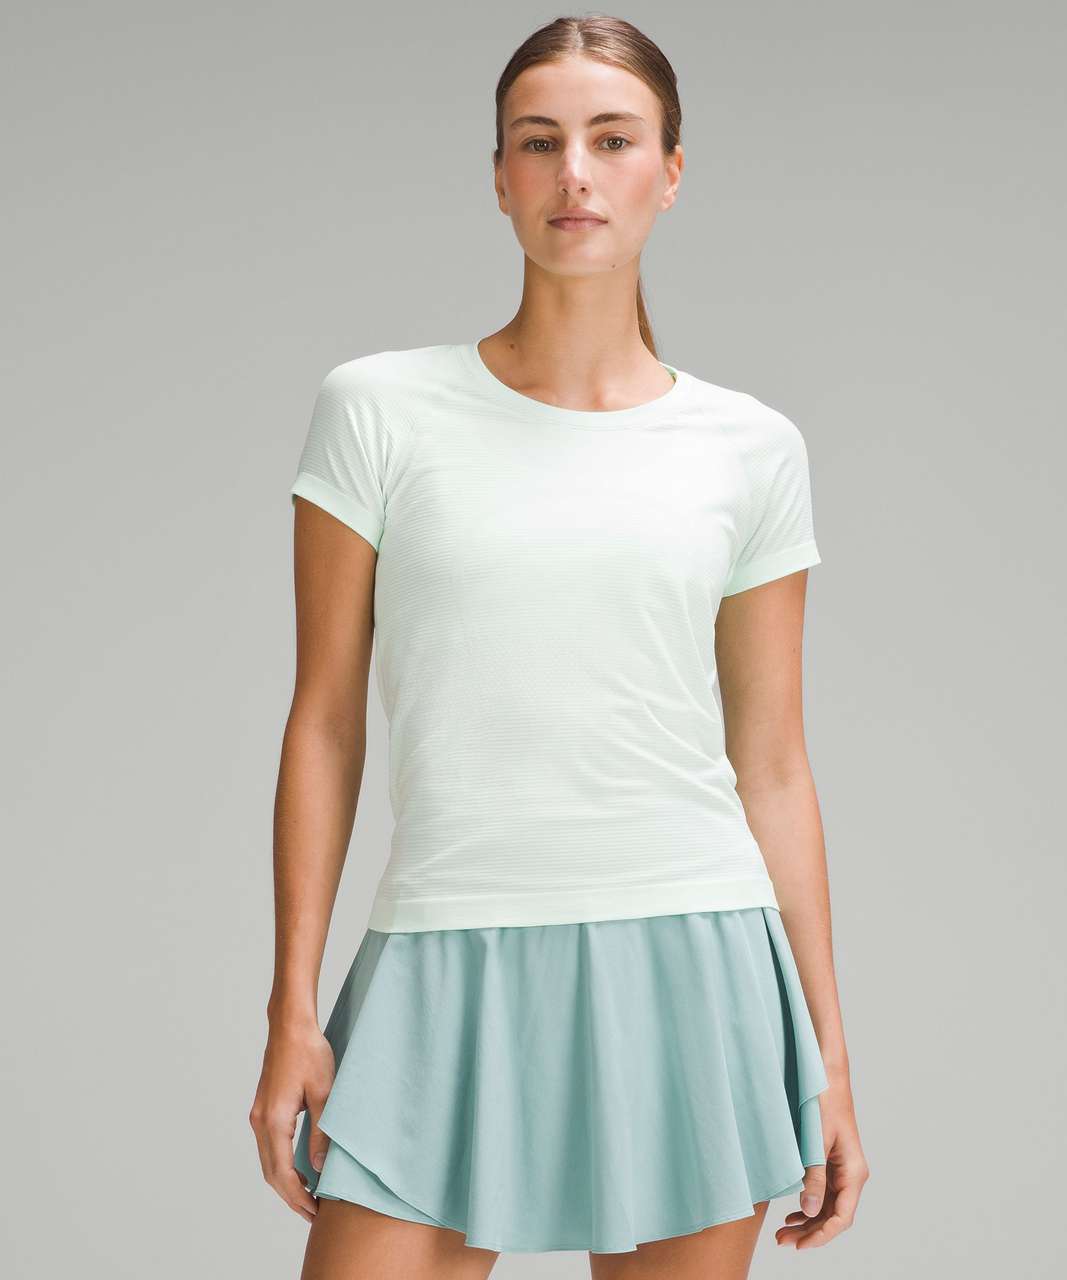 Lululemon Swiftly Tech Short-Sleeve Shirt 2.0 *Race Length - Mint Moment / Mint Moment